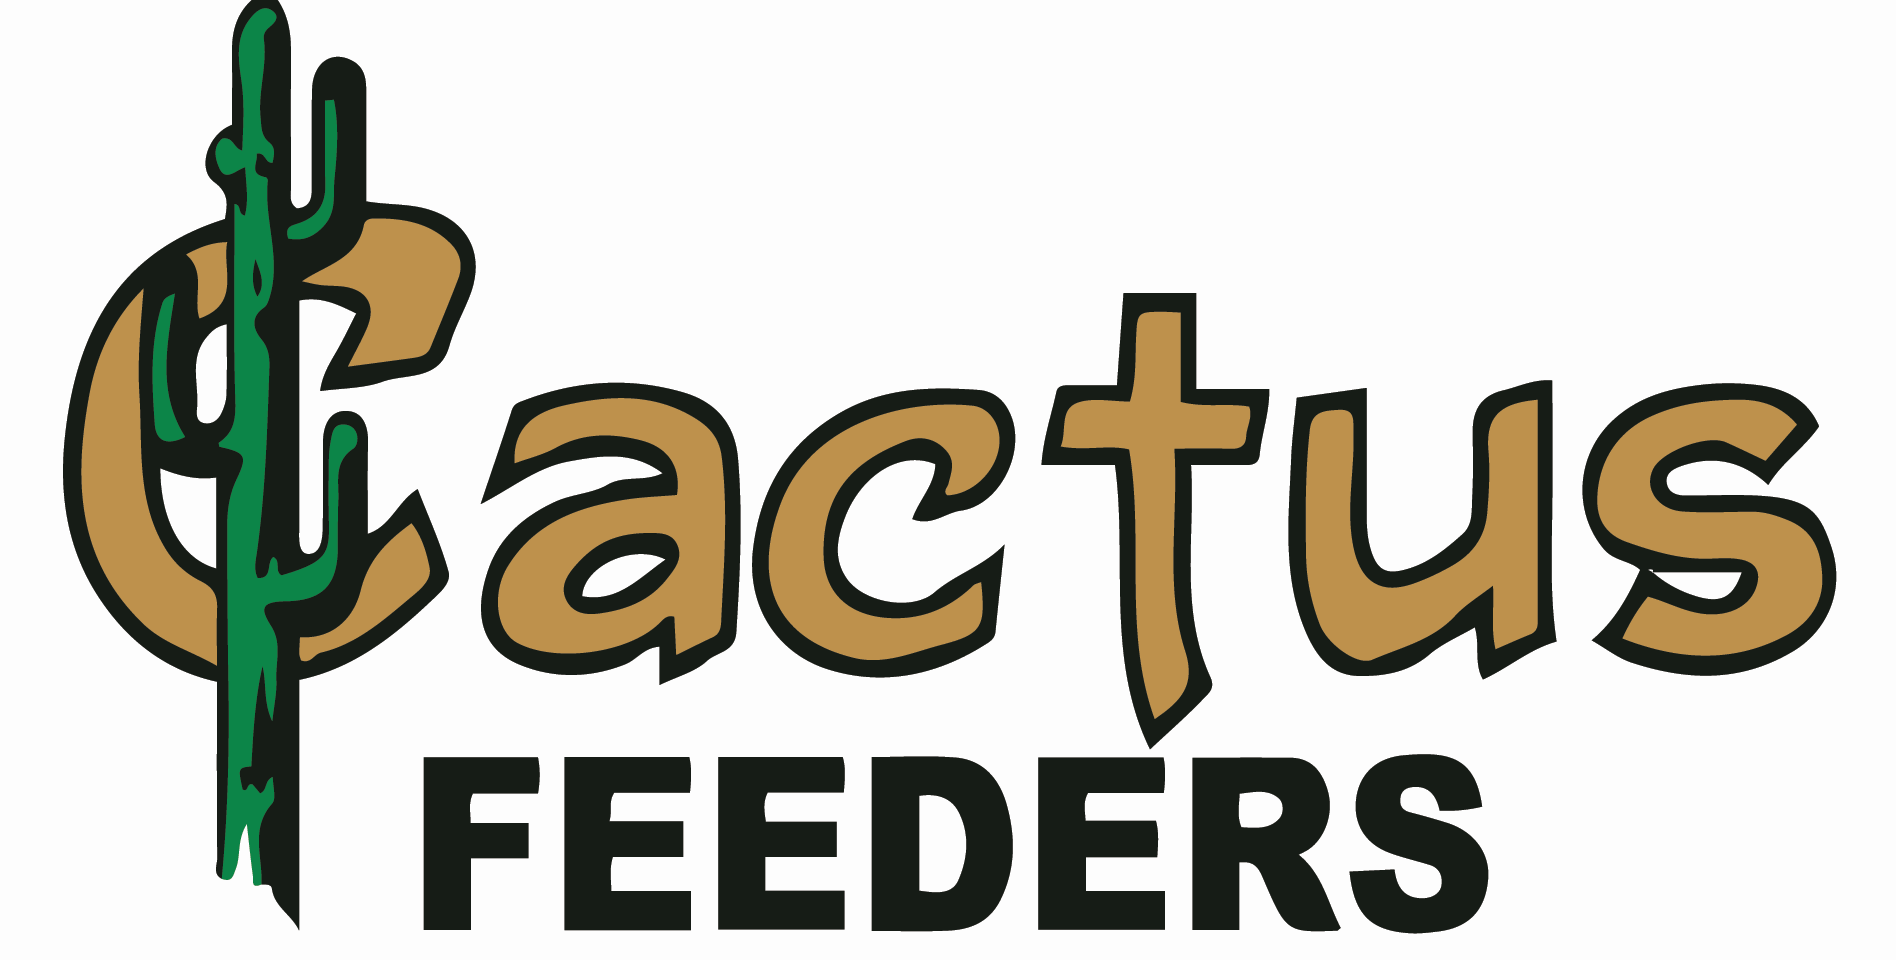 Cactus Feeders Logo